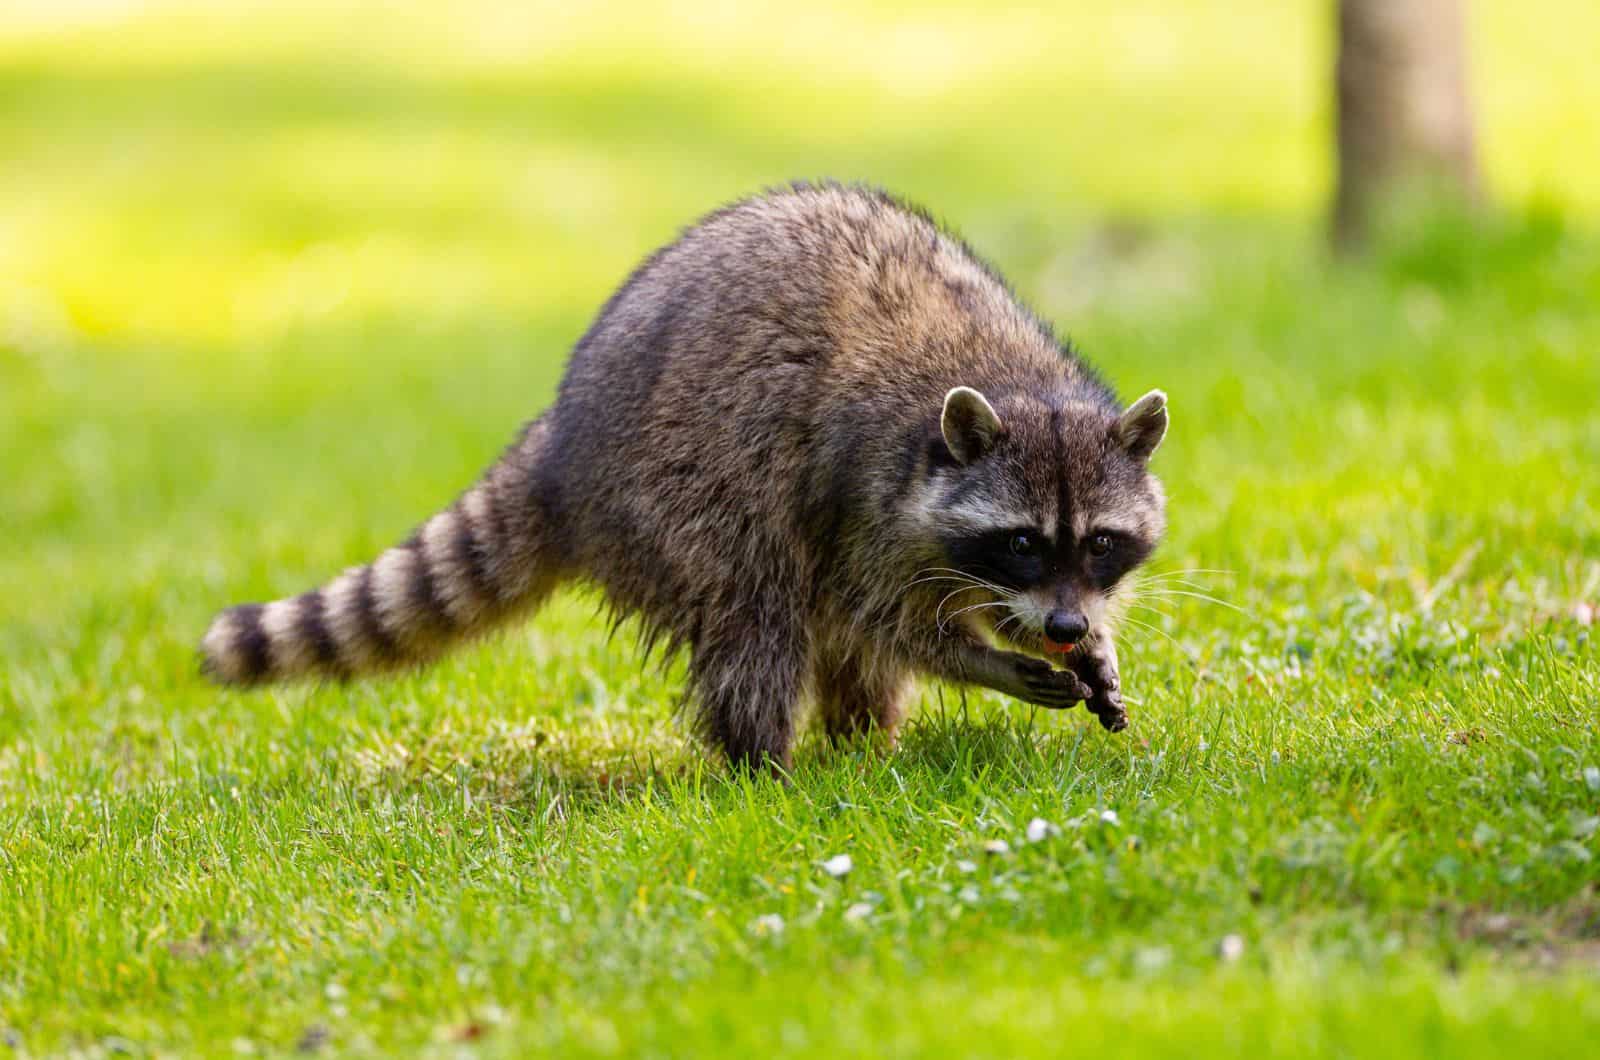 Raccoon walking on grass